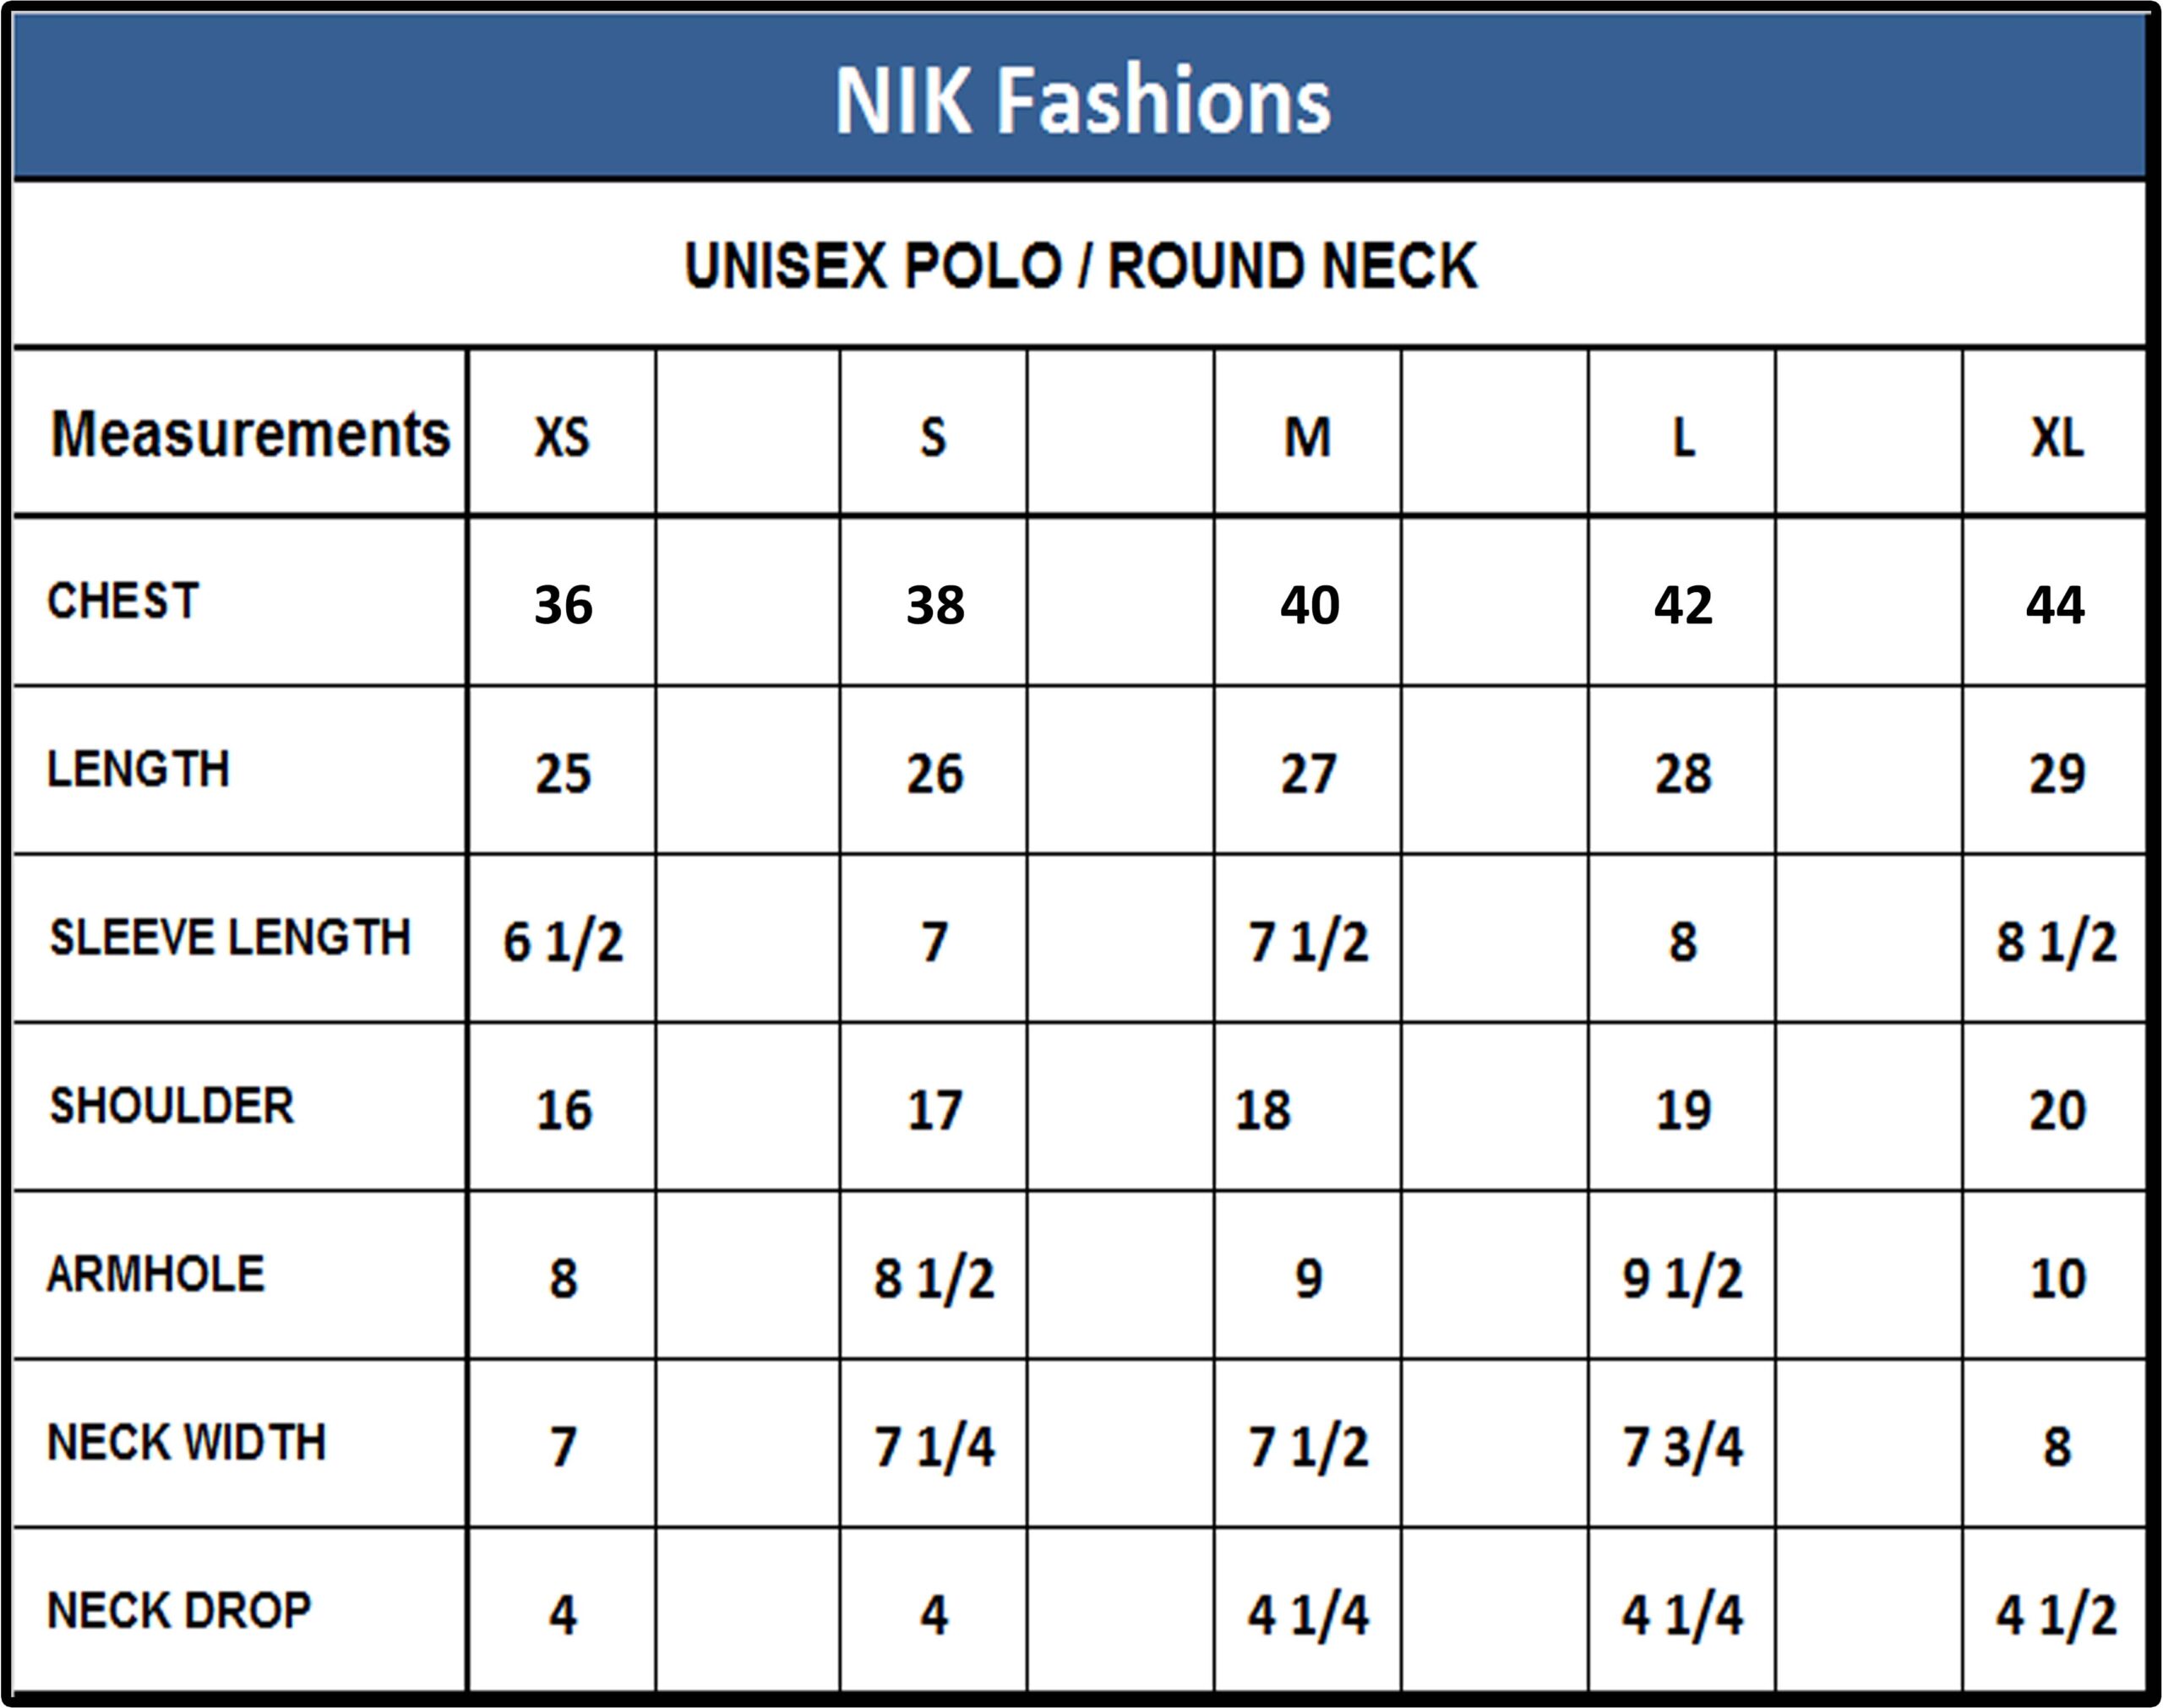 NIK Fashions Unisex Polo - Round Neck Size Chart